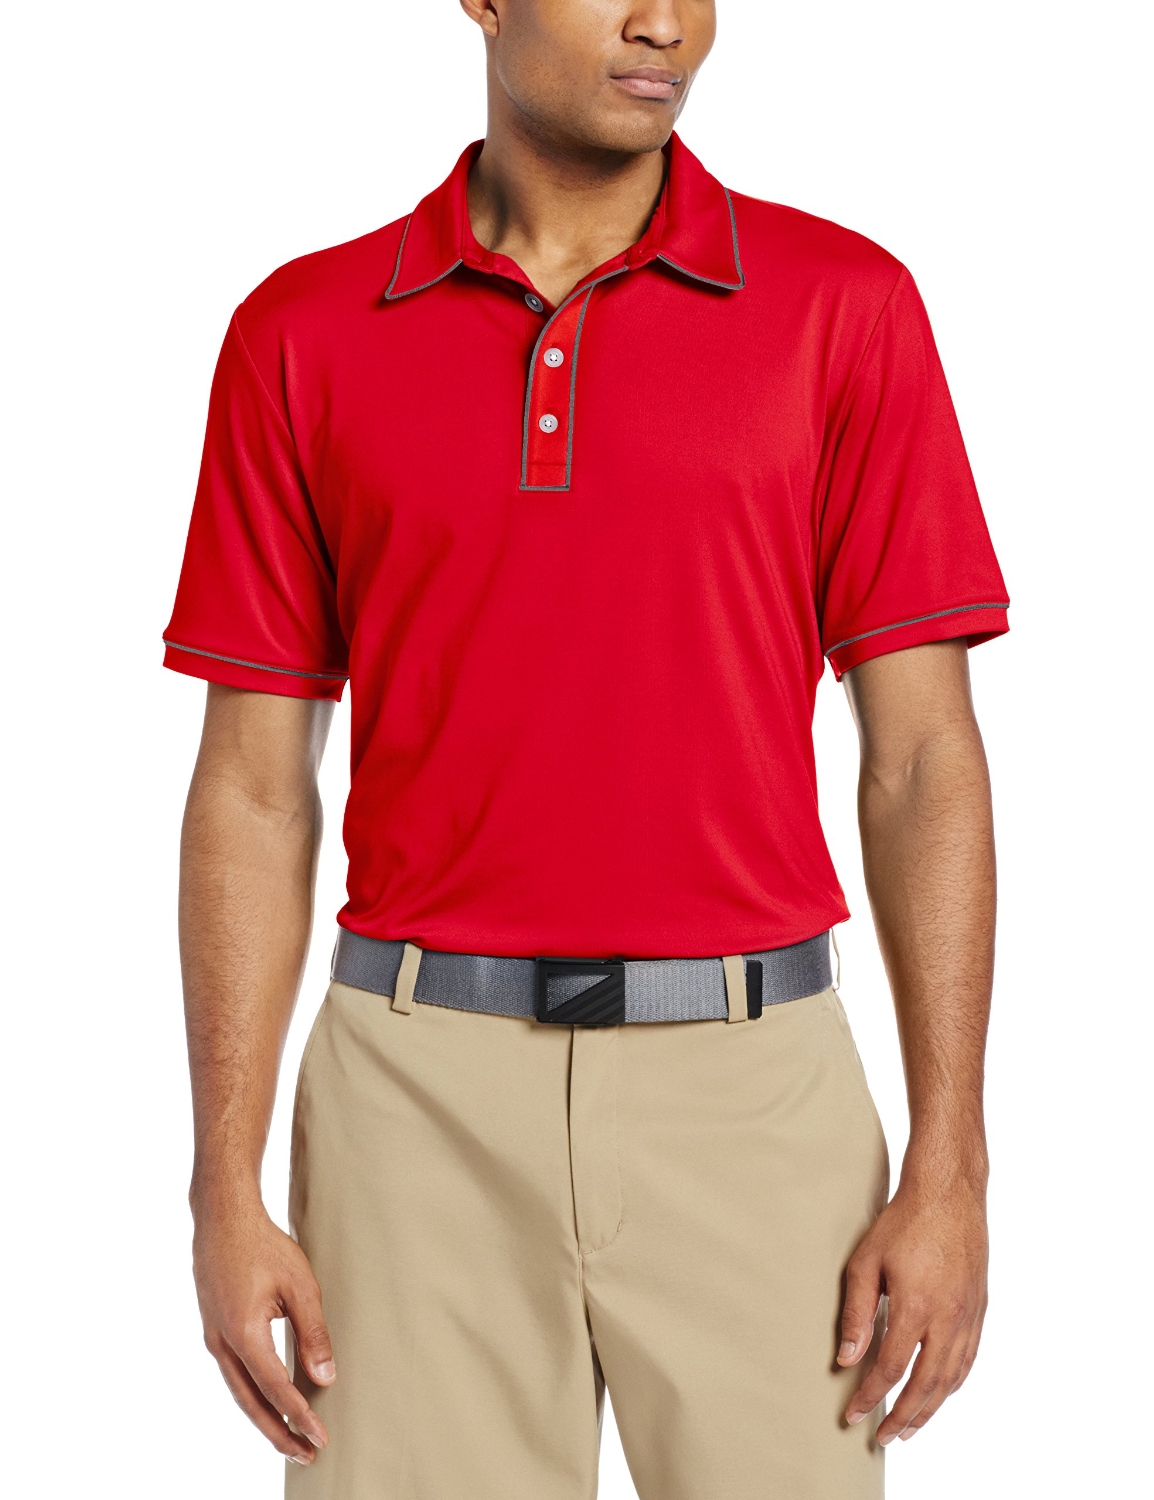 Adidas Mens Puremotion Piped Golf Shirts